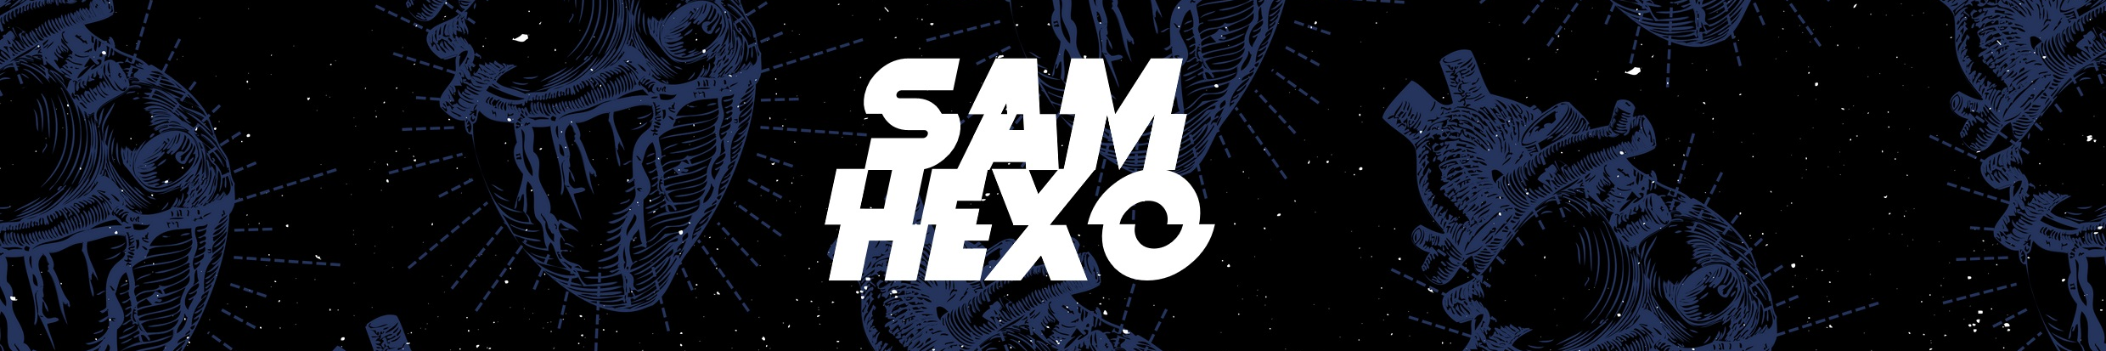 Sam Hexo